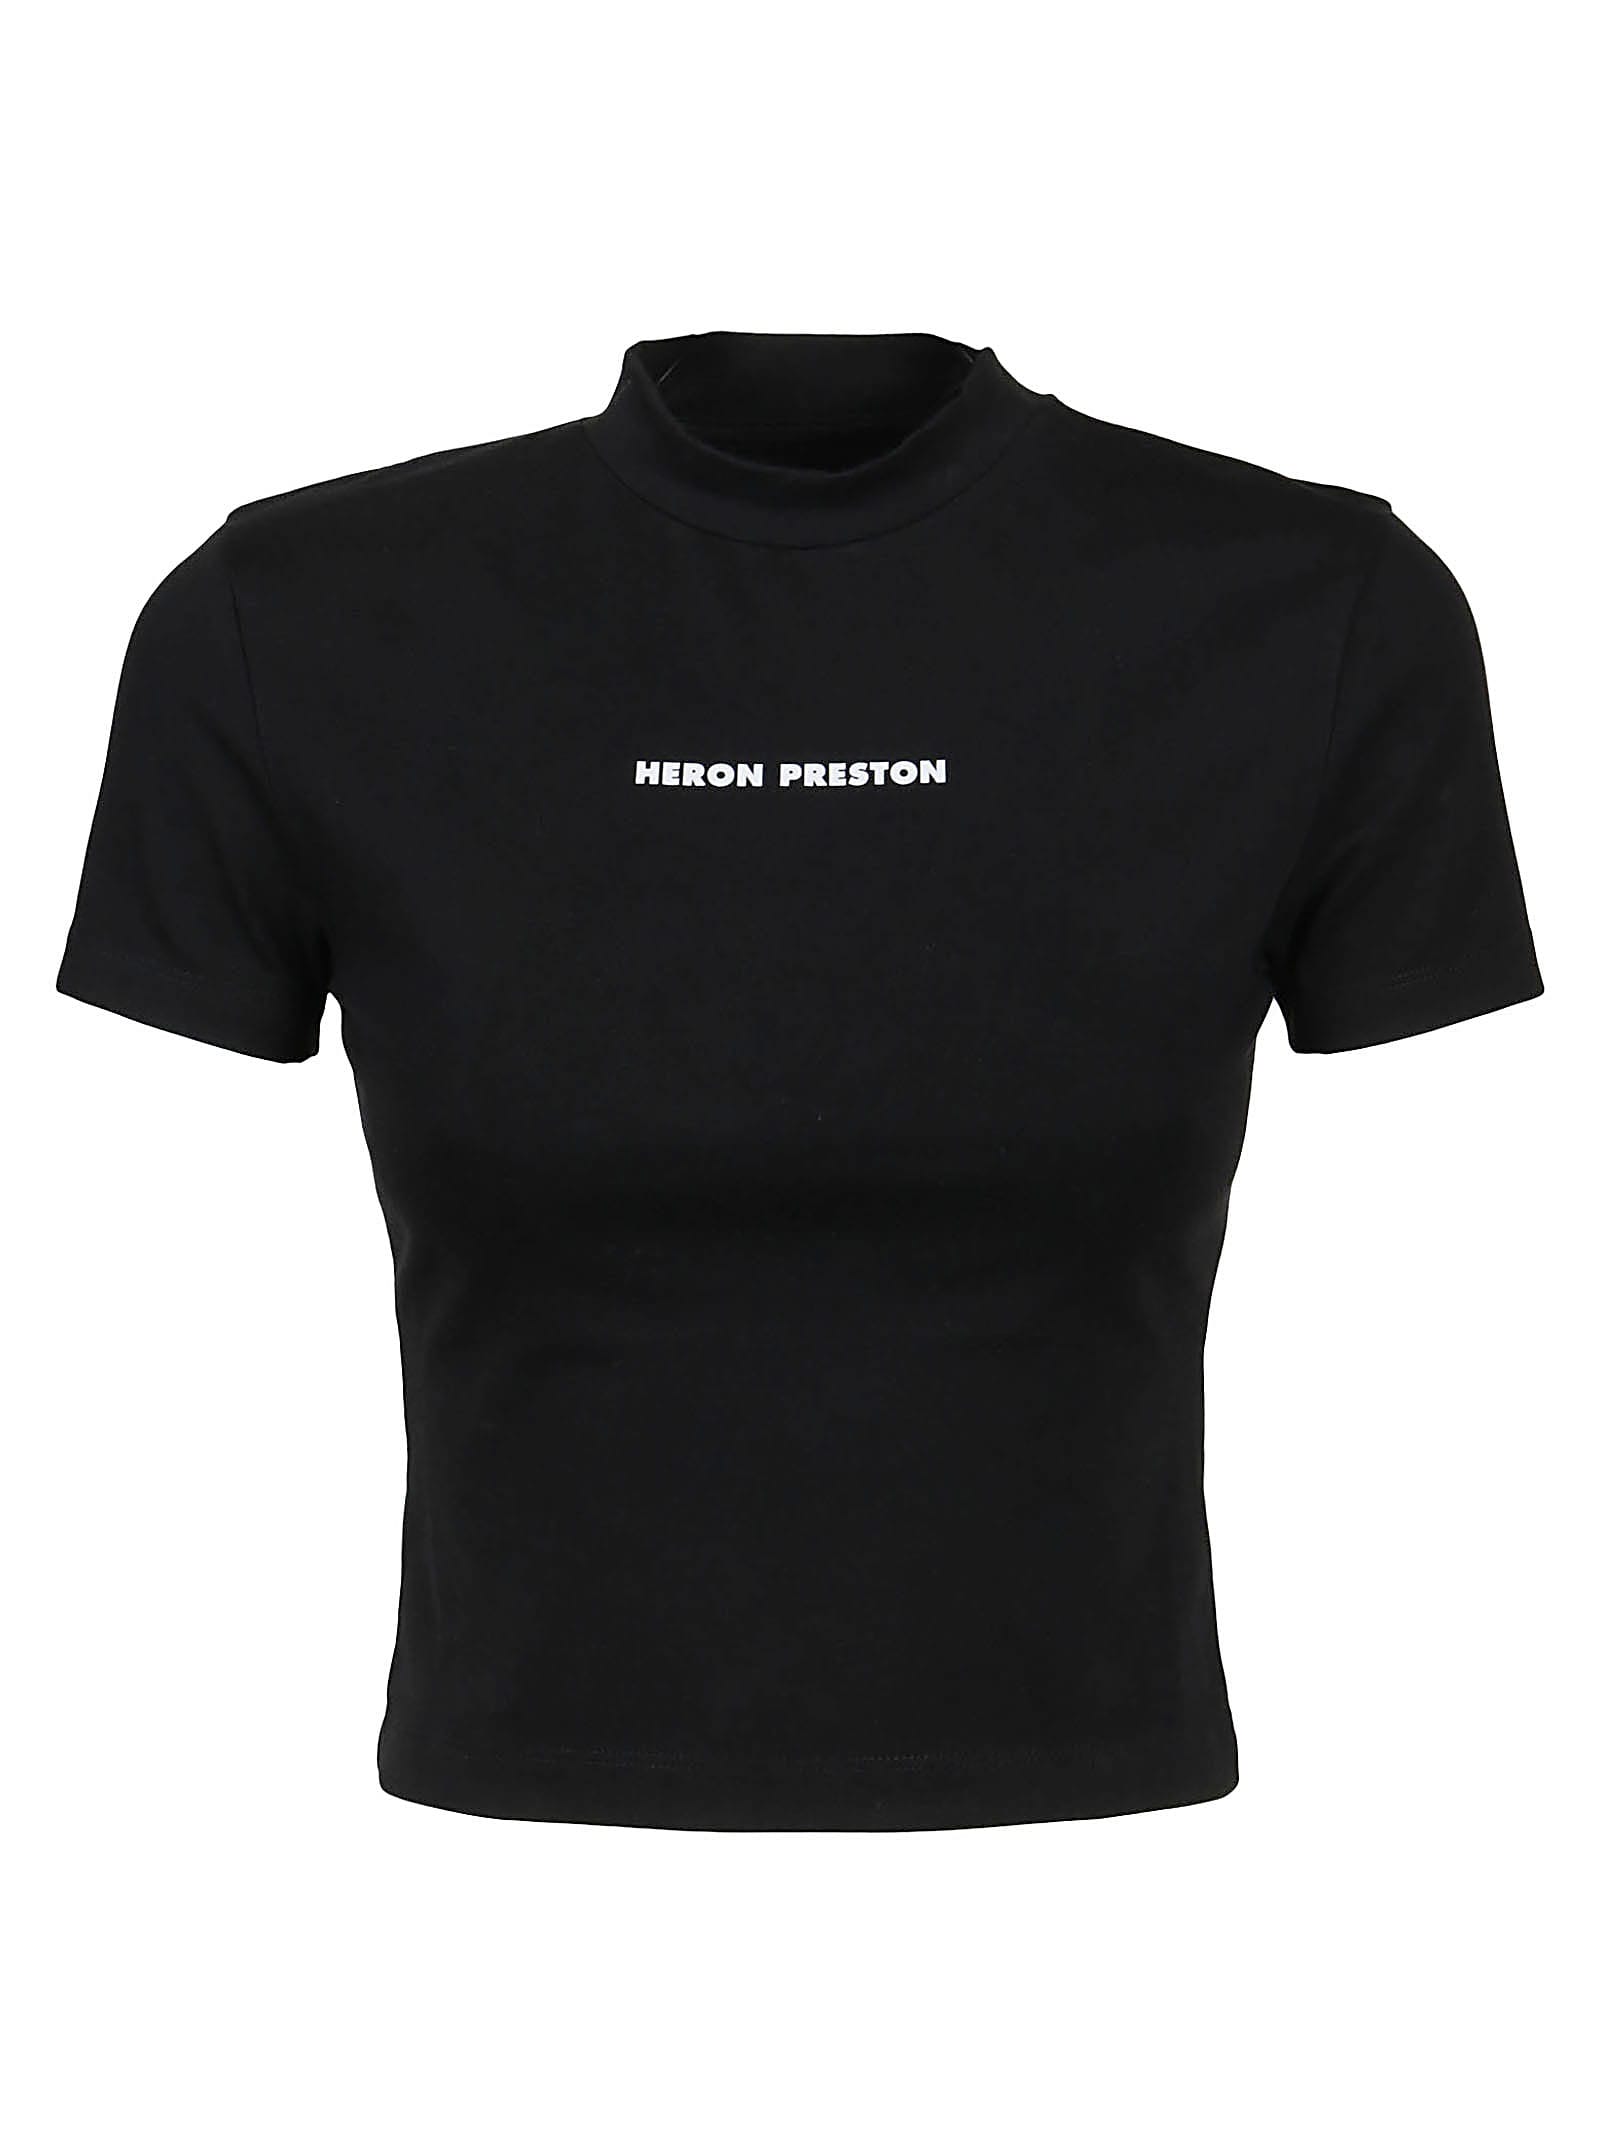 HERON PRESTON Baby T-shirt